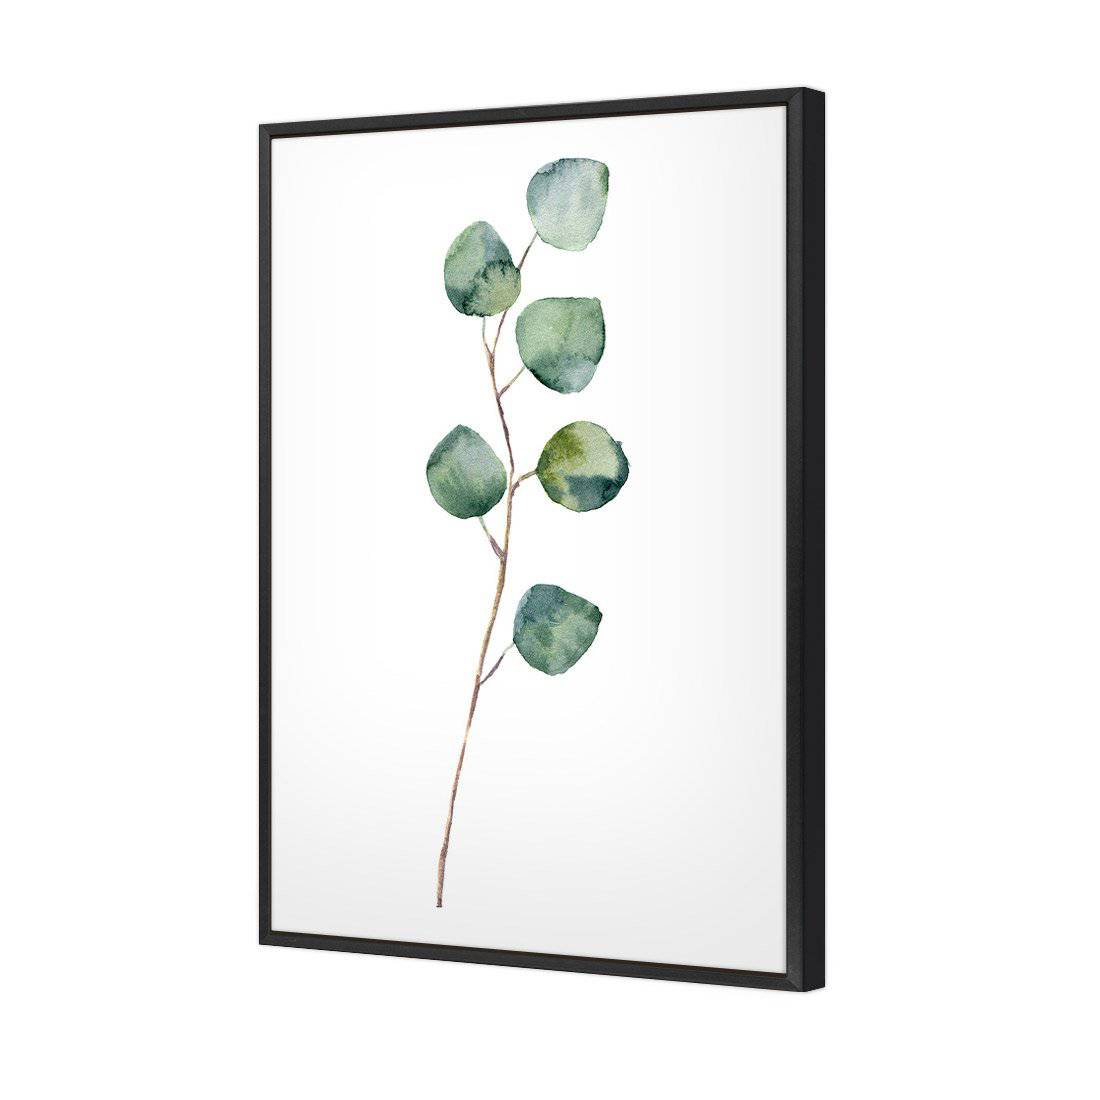 Fragrant Herb 3 Canvas Art-Canvas-Wall Art Designs-45x30cm-Canvas - Black Frame-Wall Art Designs